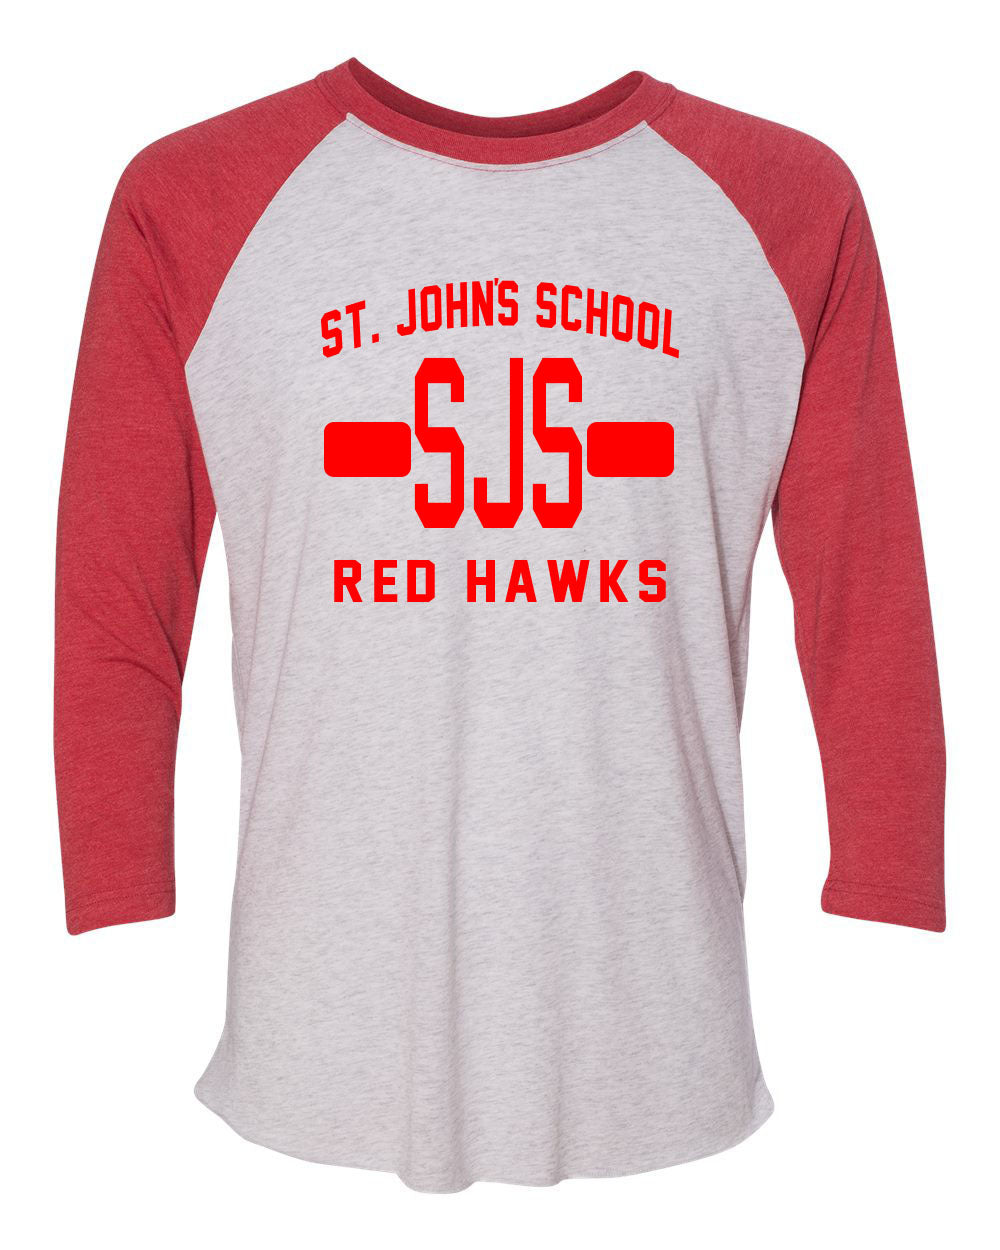 St. John's design 2 raglan shirt